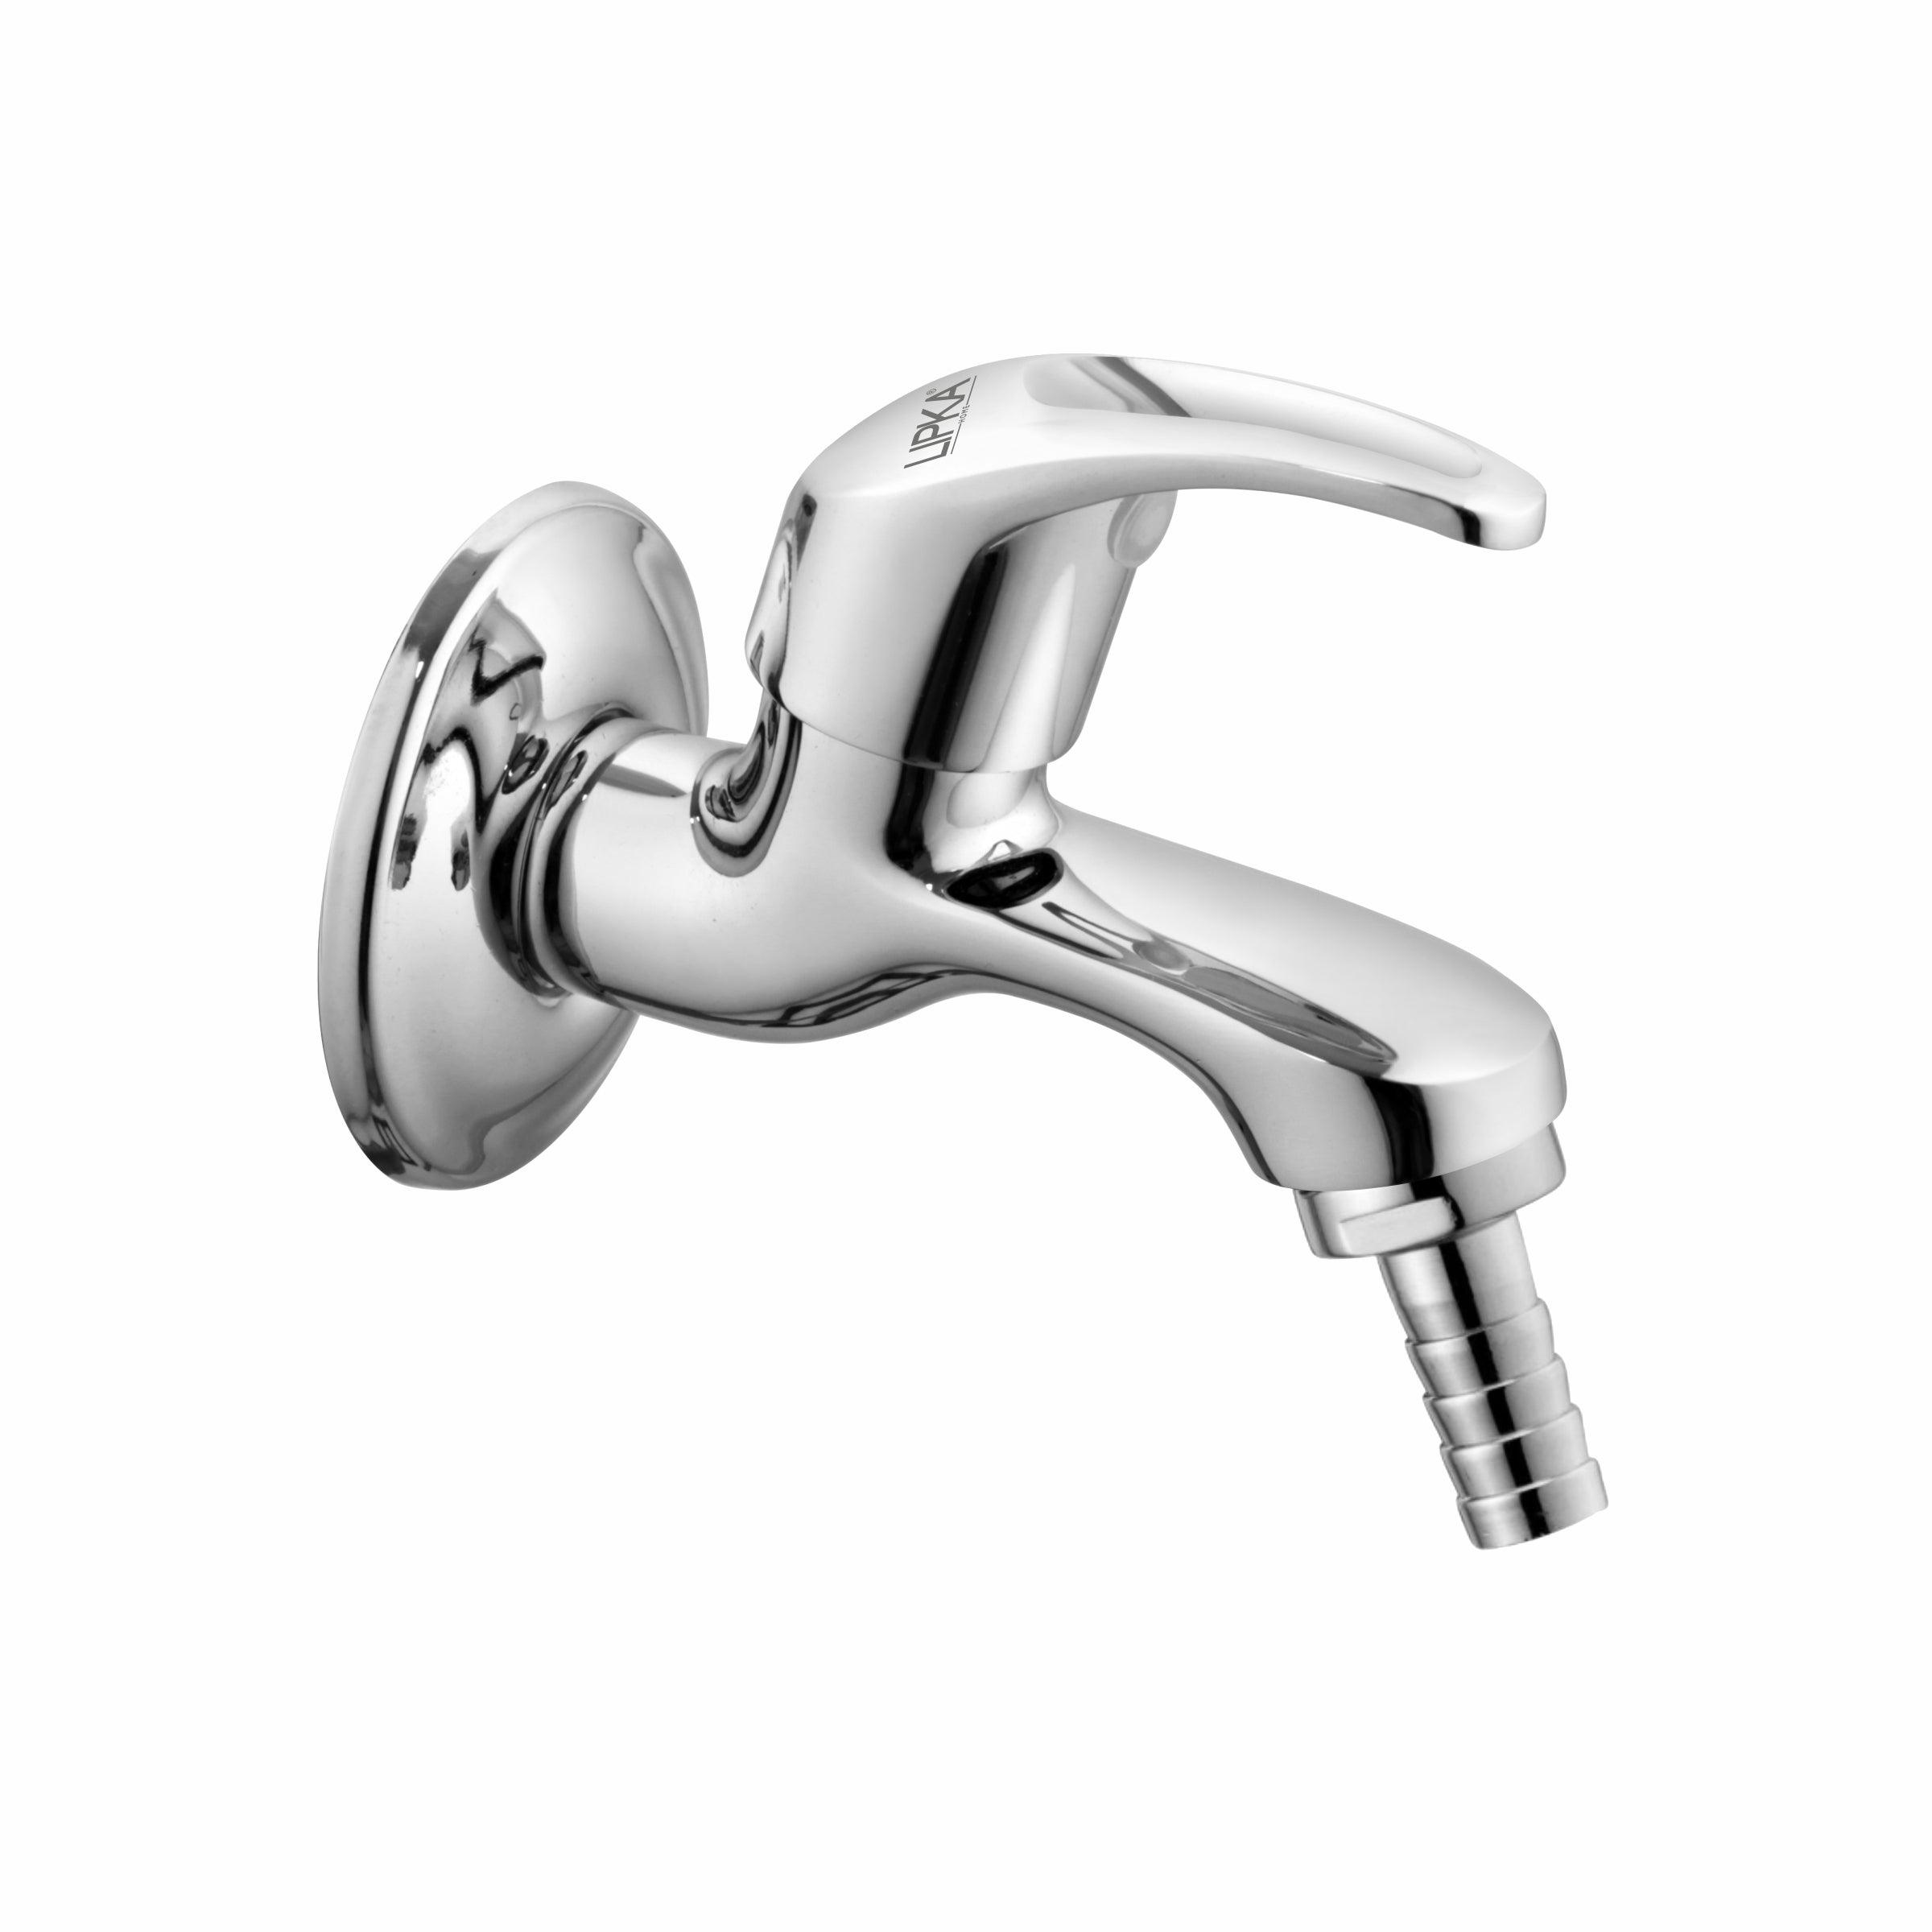 Pixel Nozzle Bib Tap Brass Faucet - LIPKA - Lipka Home